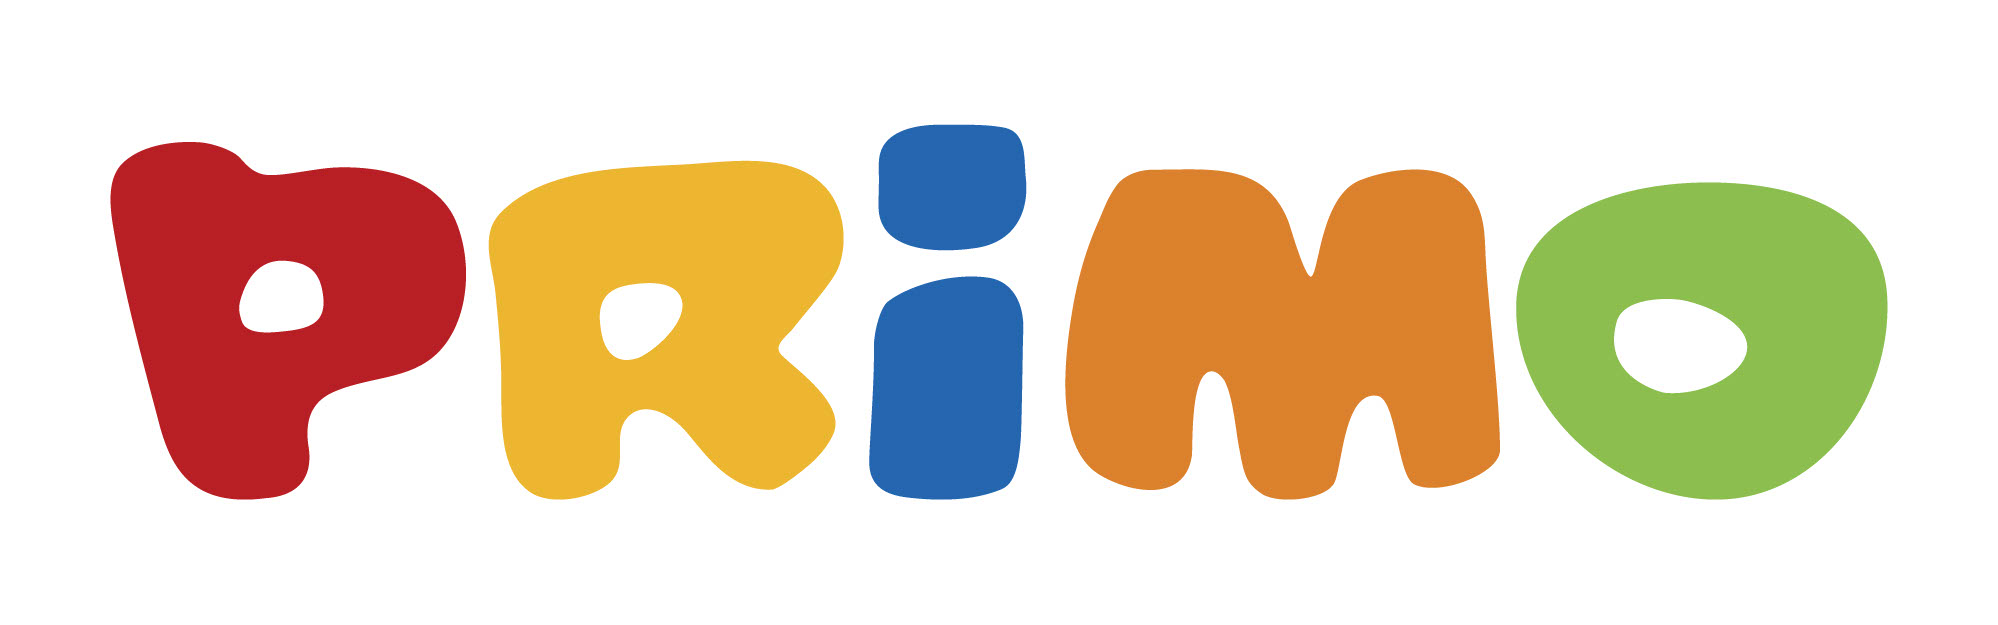 primo-logo